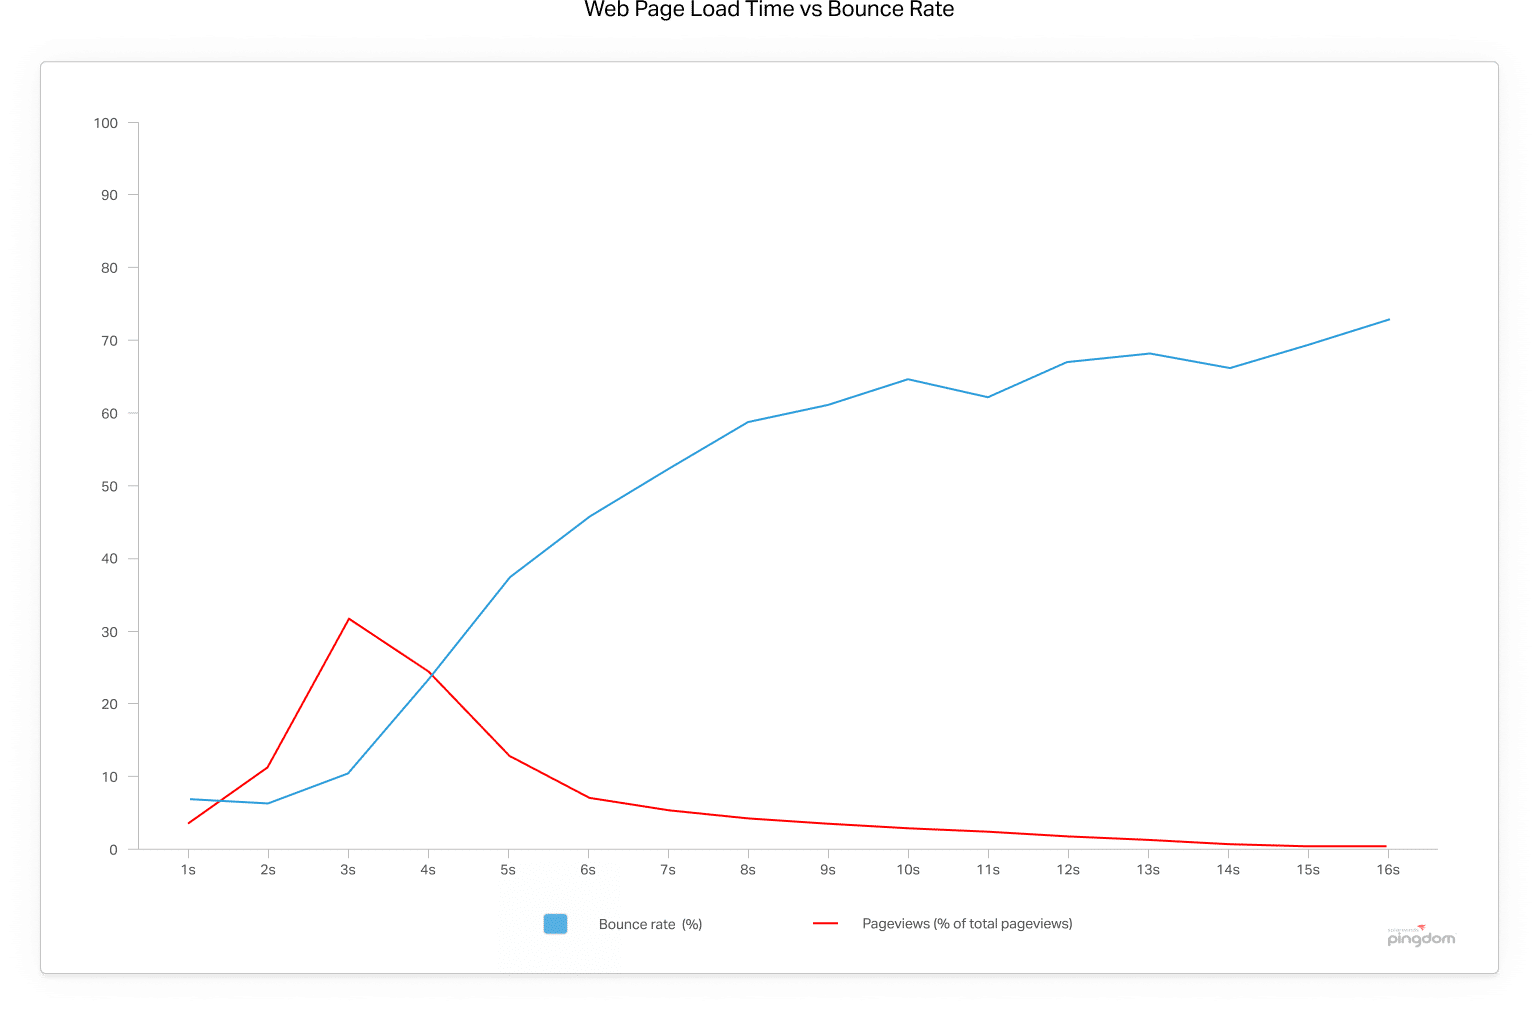 Webpagina laadtijd vs bouncepercentage